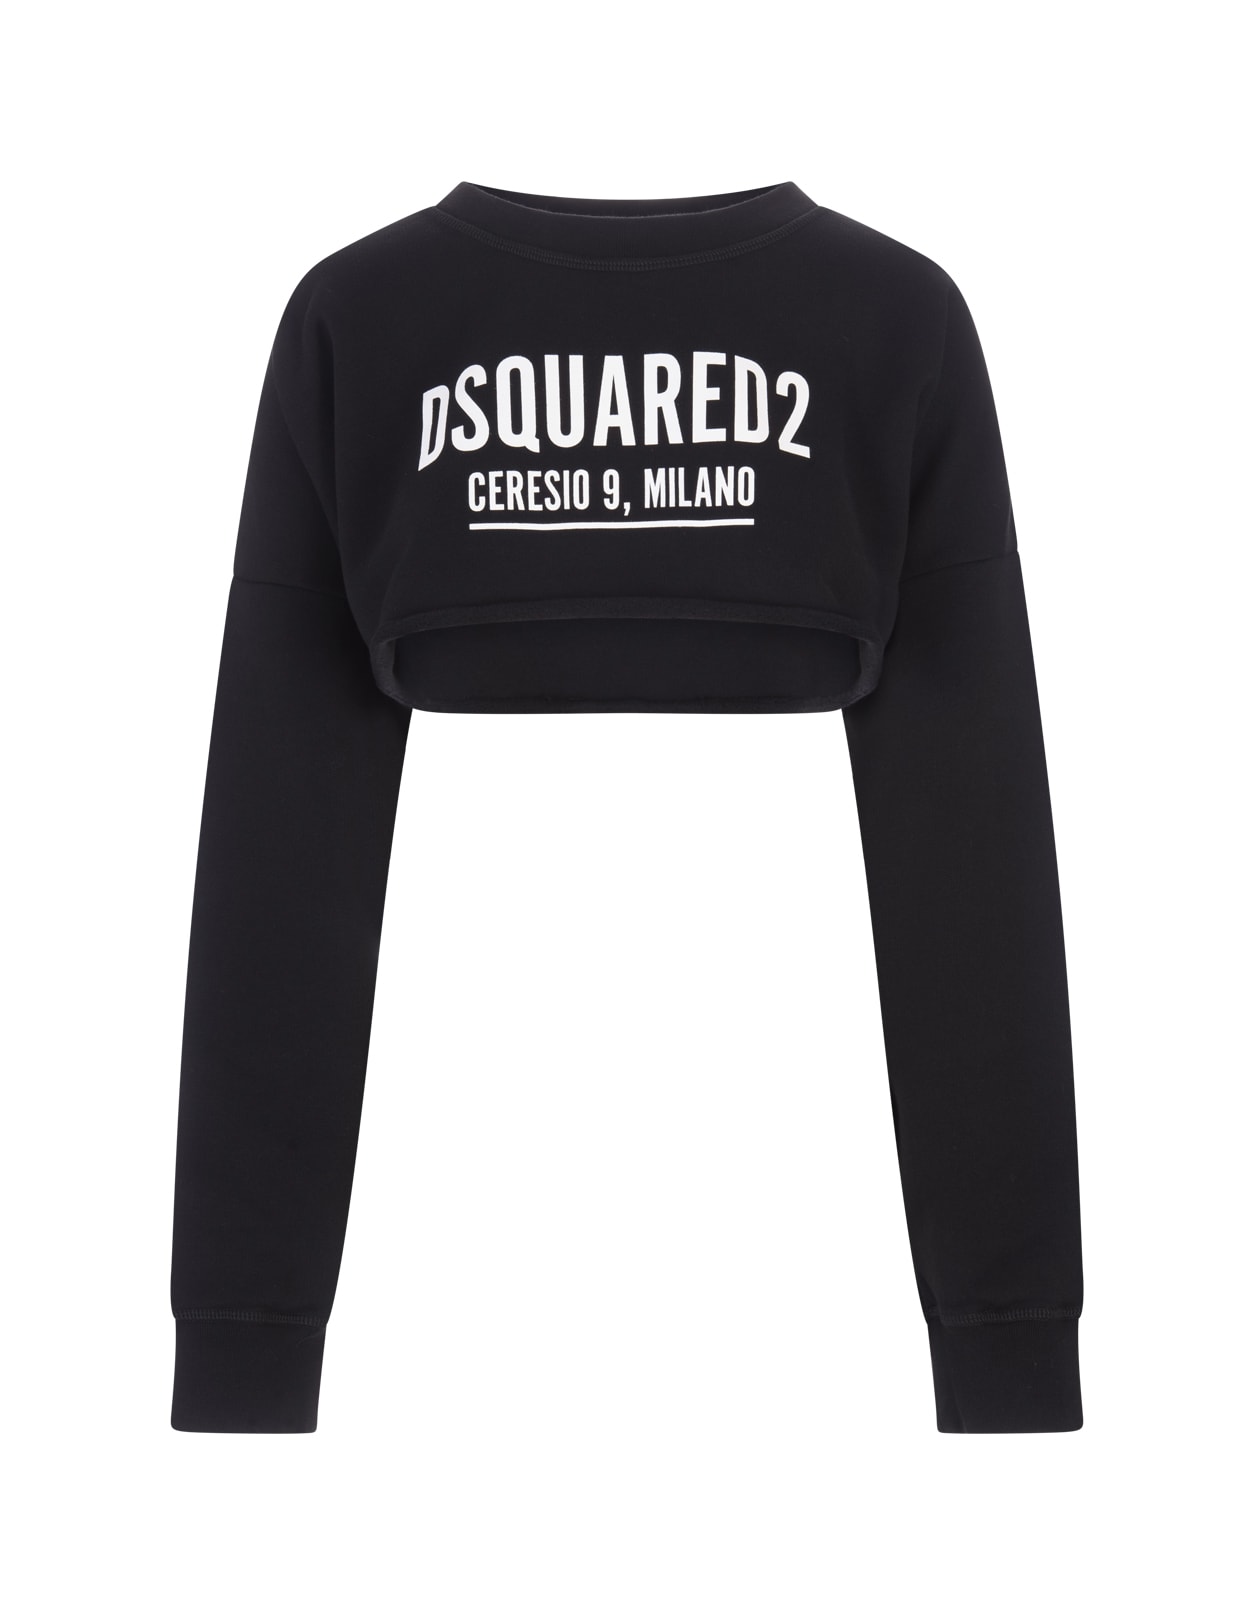 Woman Black dsquared2 Ceresio 9, Milano Cropped Sweatshirt